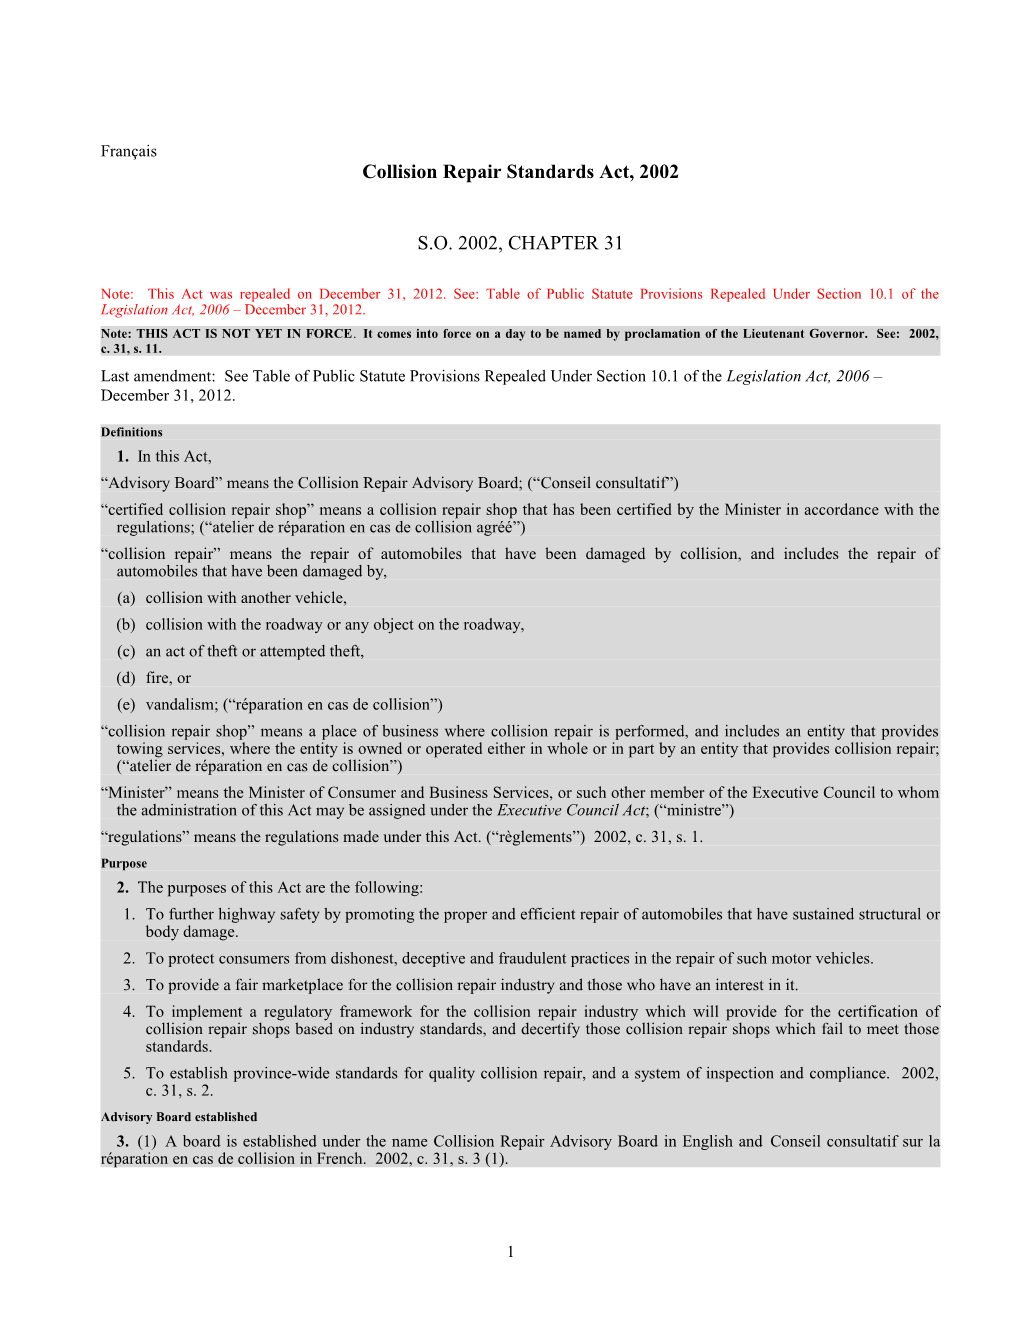 Collision Repair Standards Act, 2002, S.O. 2002, C. 31